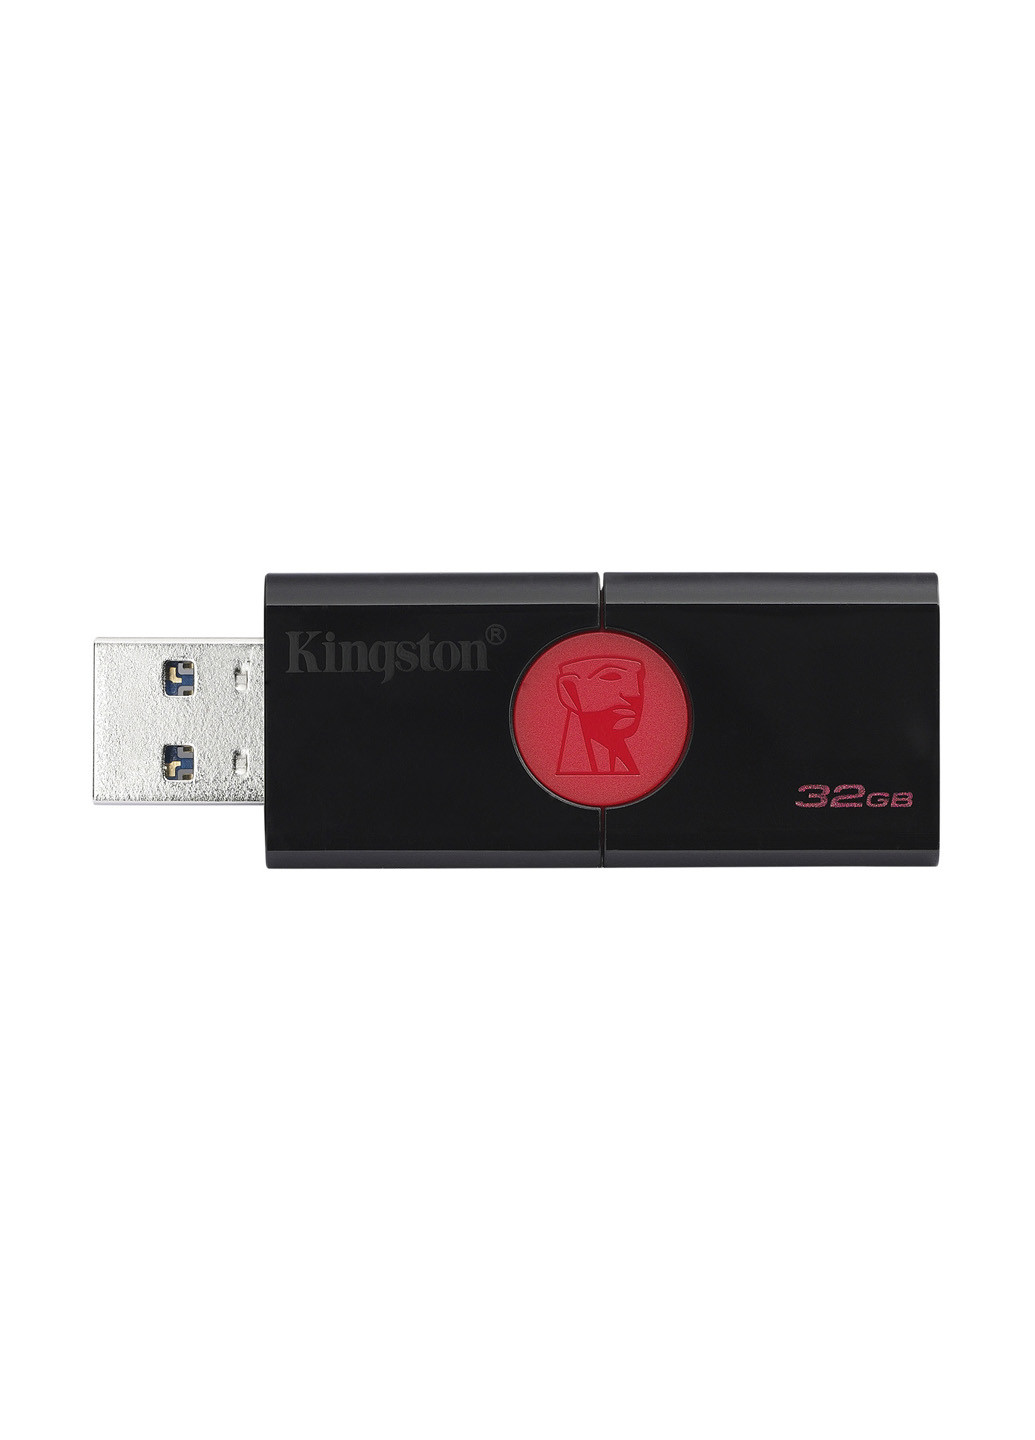 Флеш память USB DataTraveler 106 32GB USB 3.1 (DT106/32GB) Kingston флеш память usb kingston datatraveler 106 32gb usb 3.1 (dt106/32gb) (134201748)